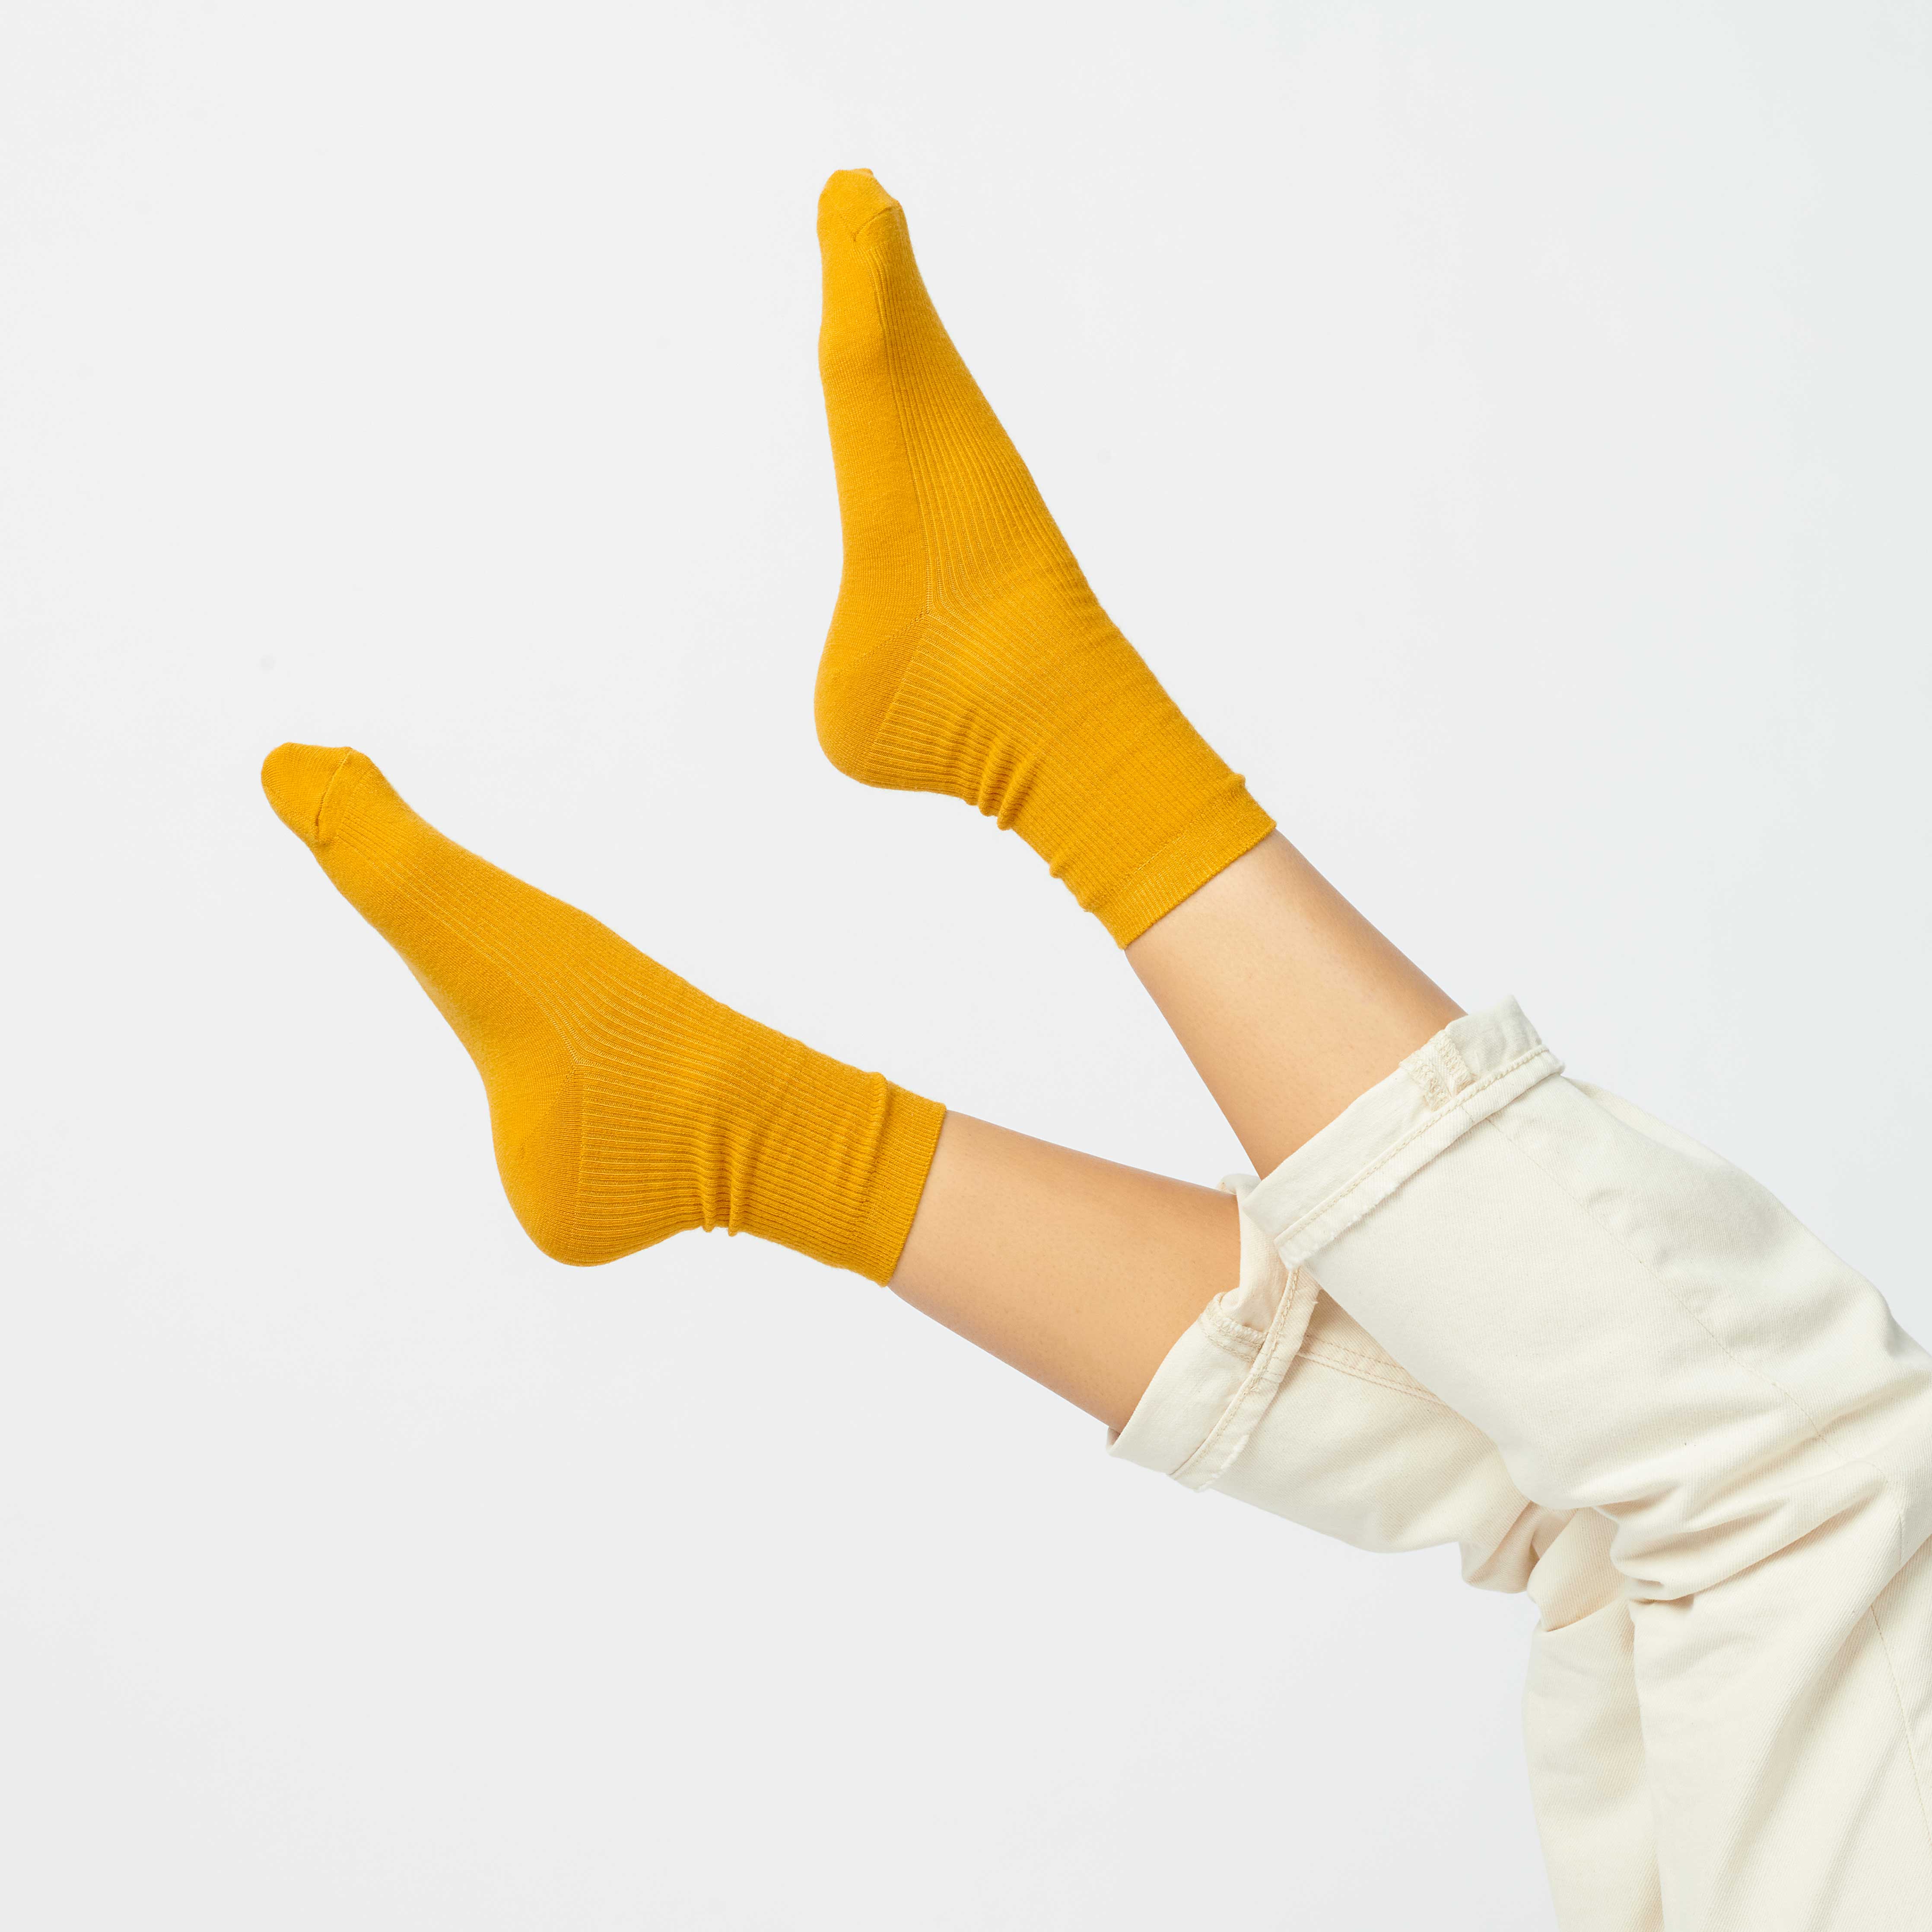 Hooray Sock Co. Gold-Hued Merino Wool Crew Socks. Cozy comfort meets fancy style. Short crew in gold hues. 20% Merino Wool.